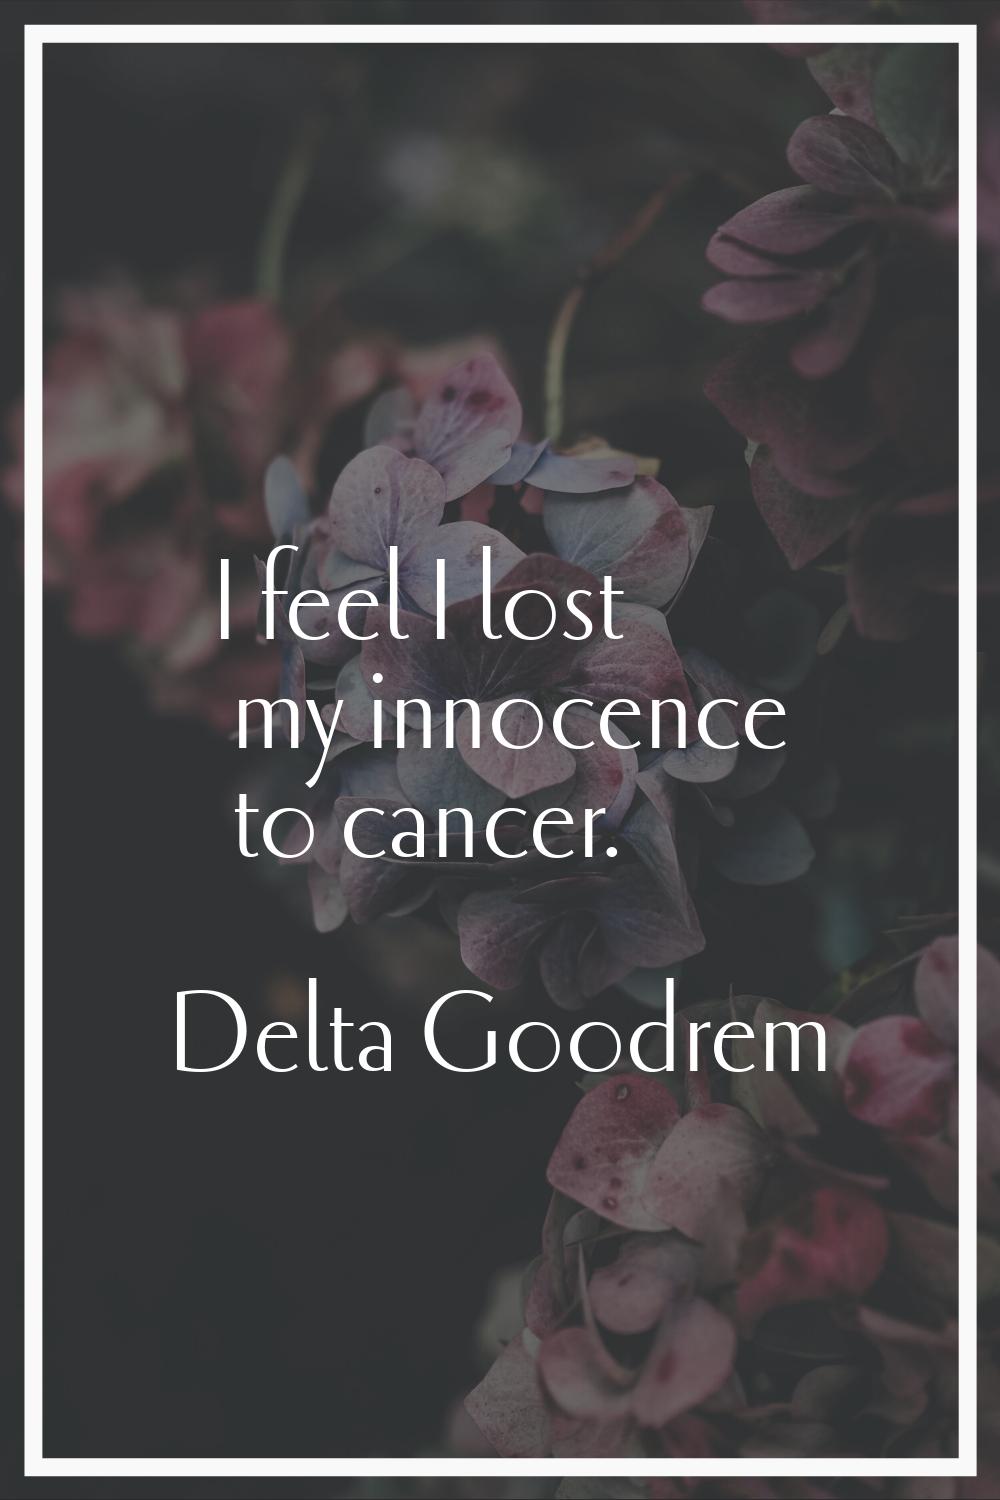 I feel I lost my innocence to cancer.